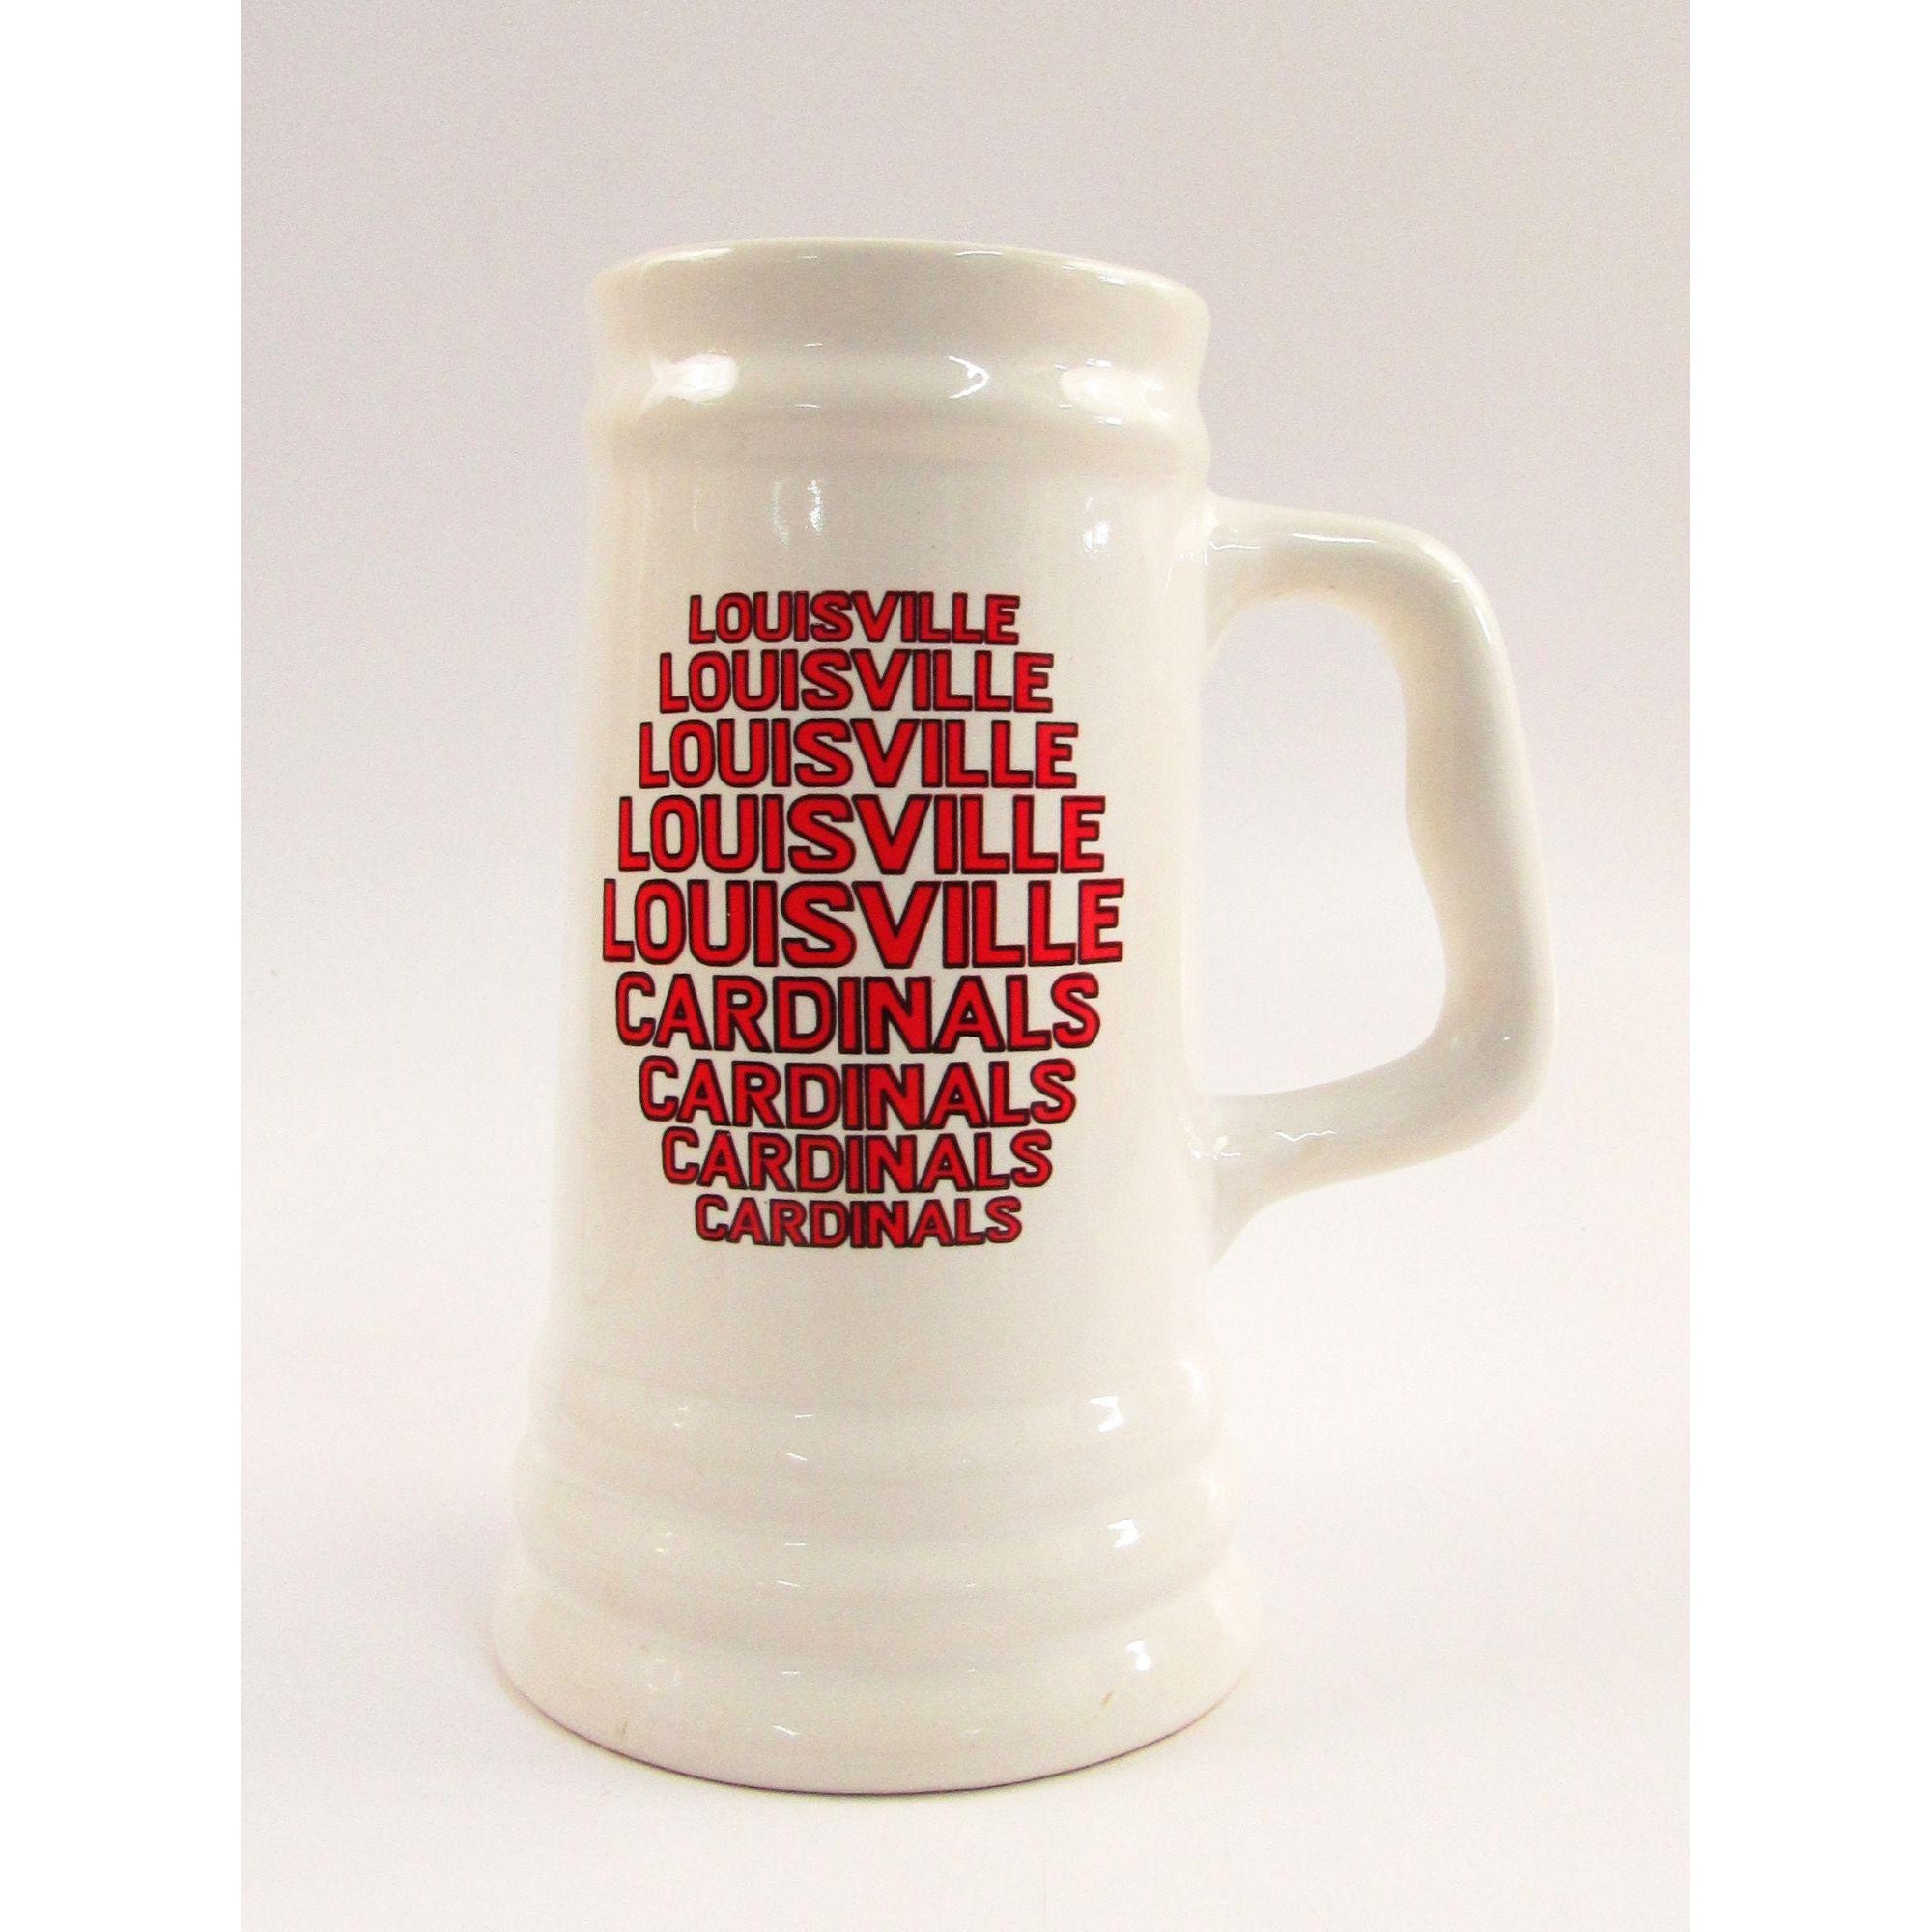 University of Louisville, Cardinals Mug